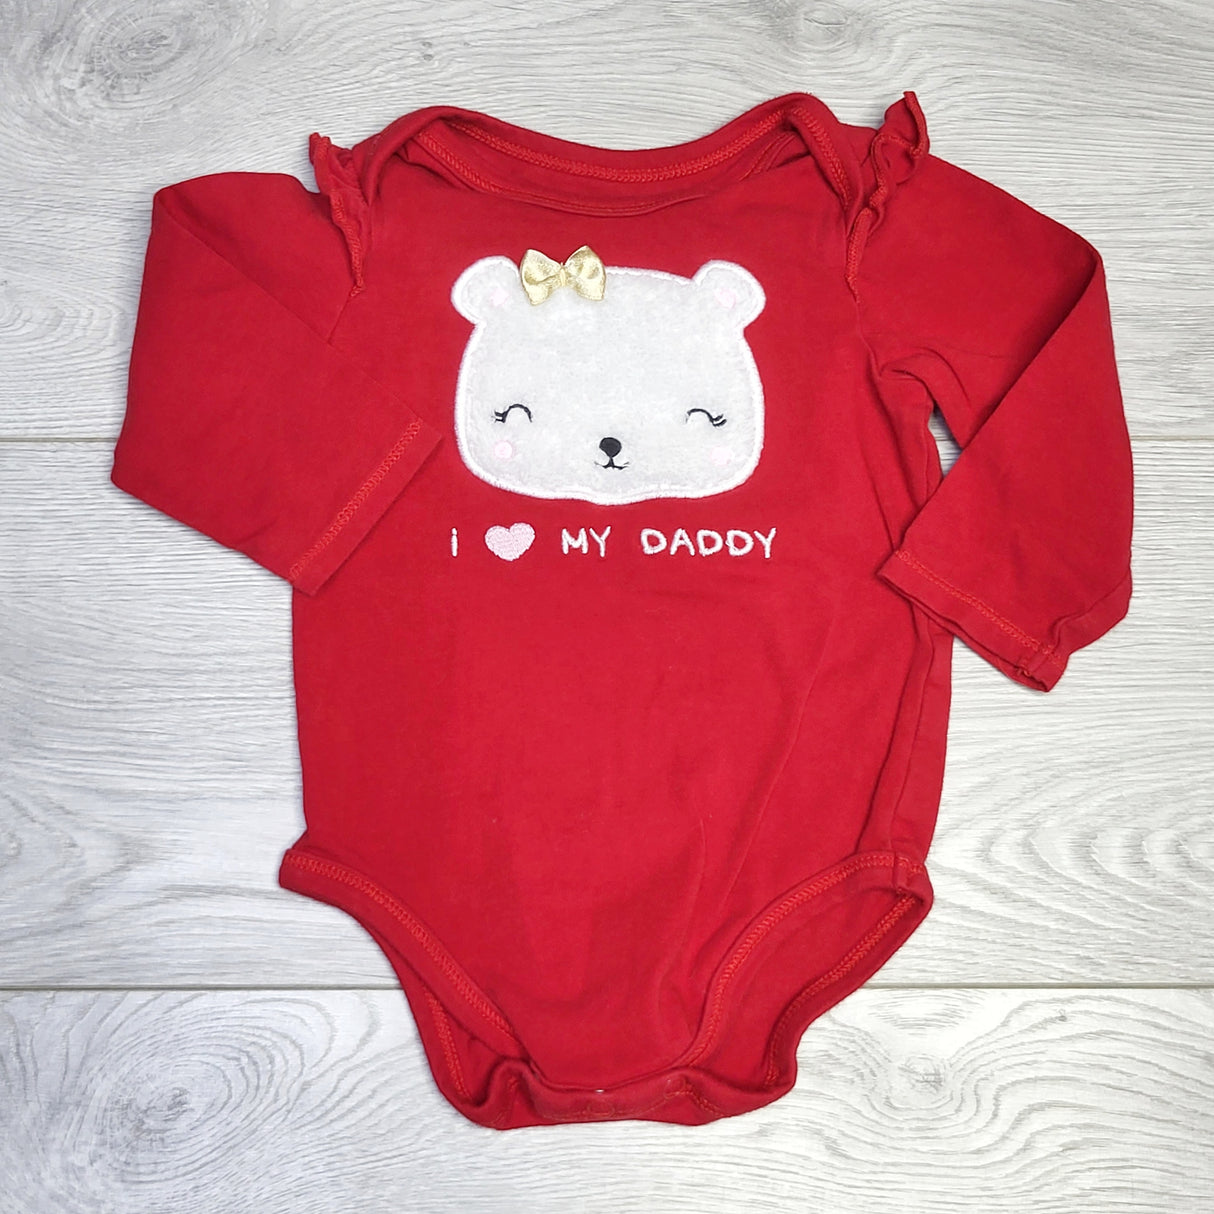 KJHN1 - First Impression red "I Love My Daddy" bodysuit. Size 3-6 months